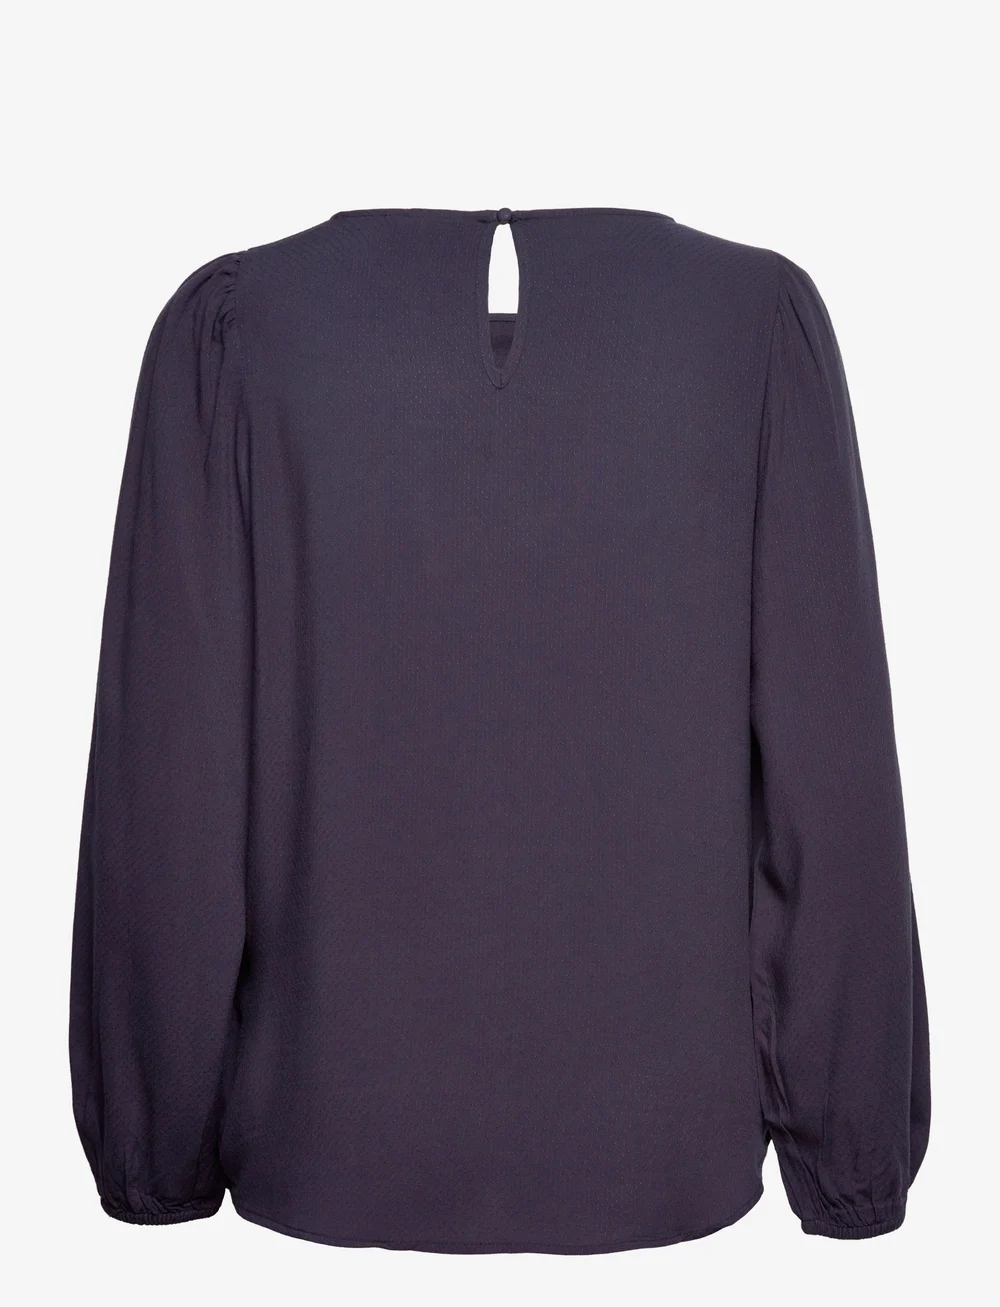 Fransa Frey Bl 1 – blusar & skjortor – shoppa på Booztlet